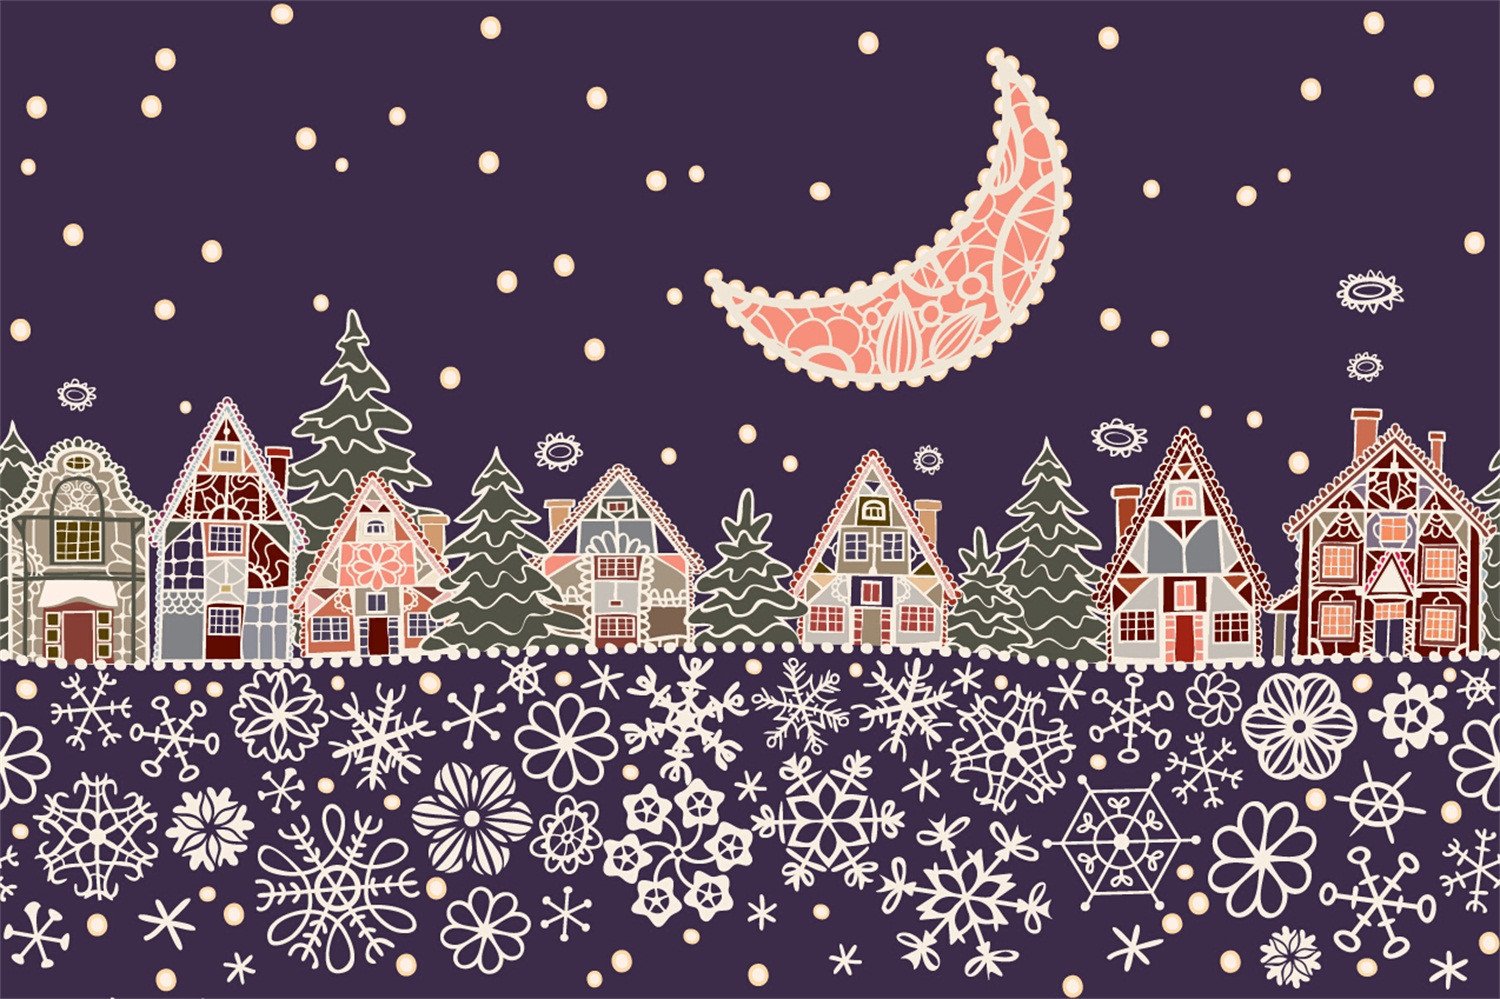 3D Christmas Purple Moon Tree 767 Wallpaper AJ Wallpaper 